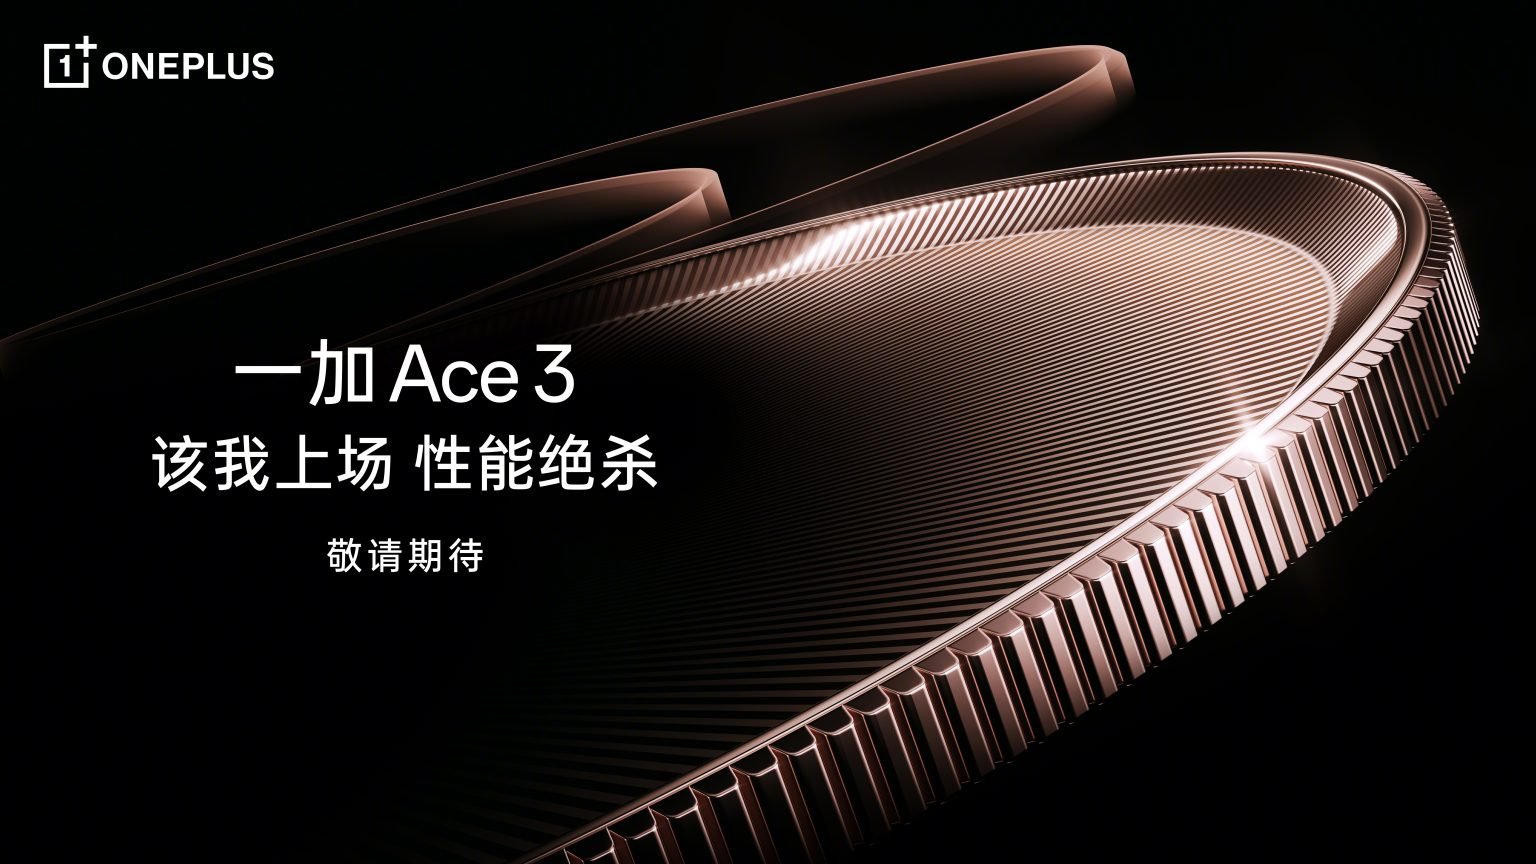 OnePlus Ace 3 bakal punya varian warna spesial terbaru